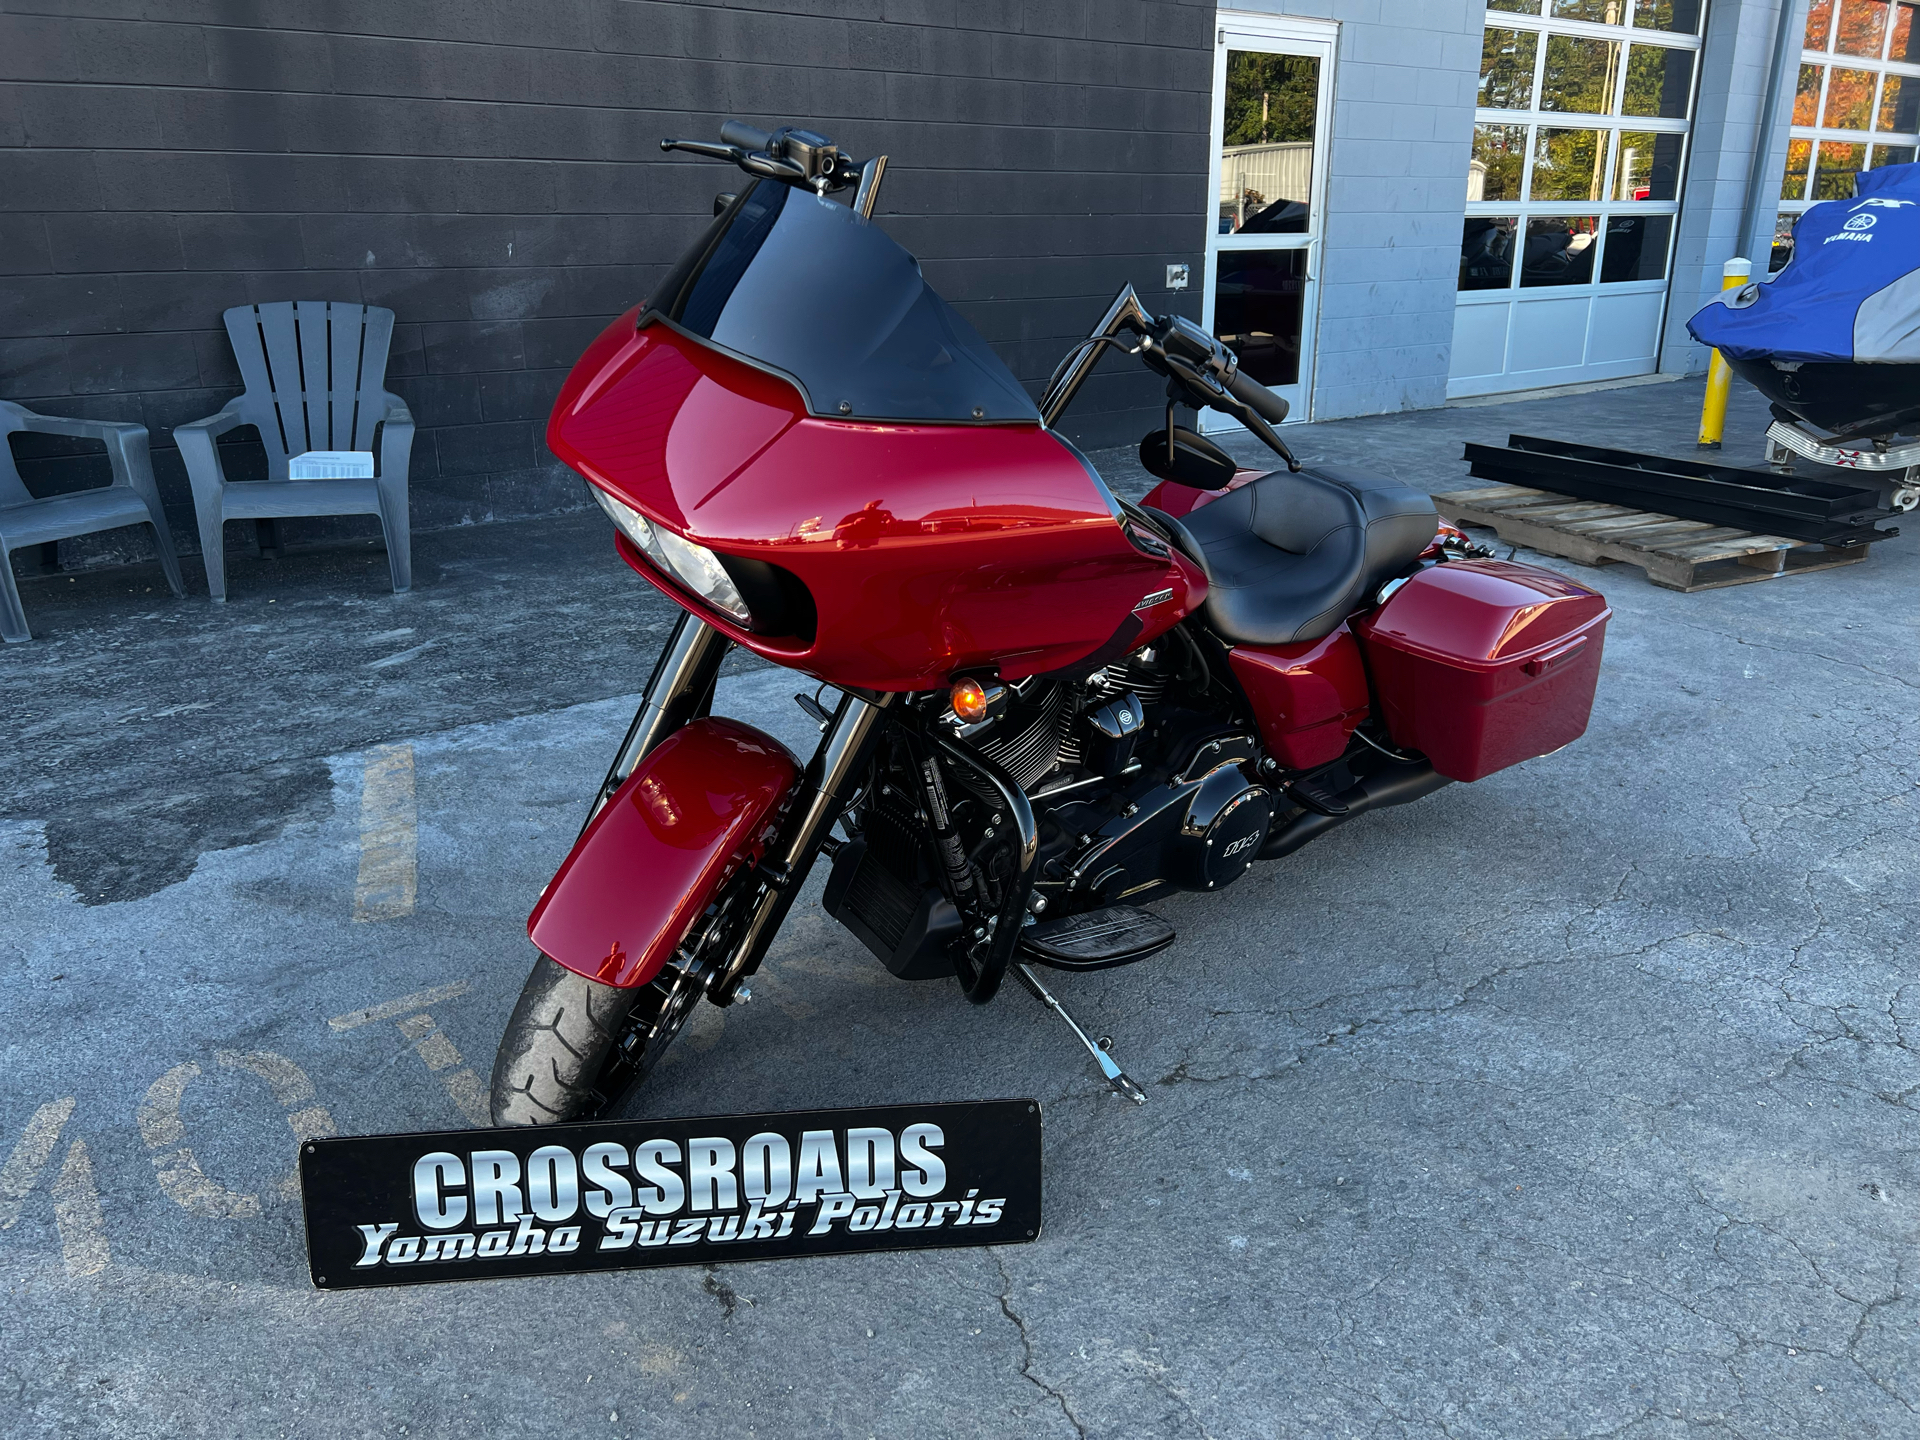 2020 Harley-Davidson Road Glide® Special in Albemarle, North Carolina - Photo 1